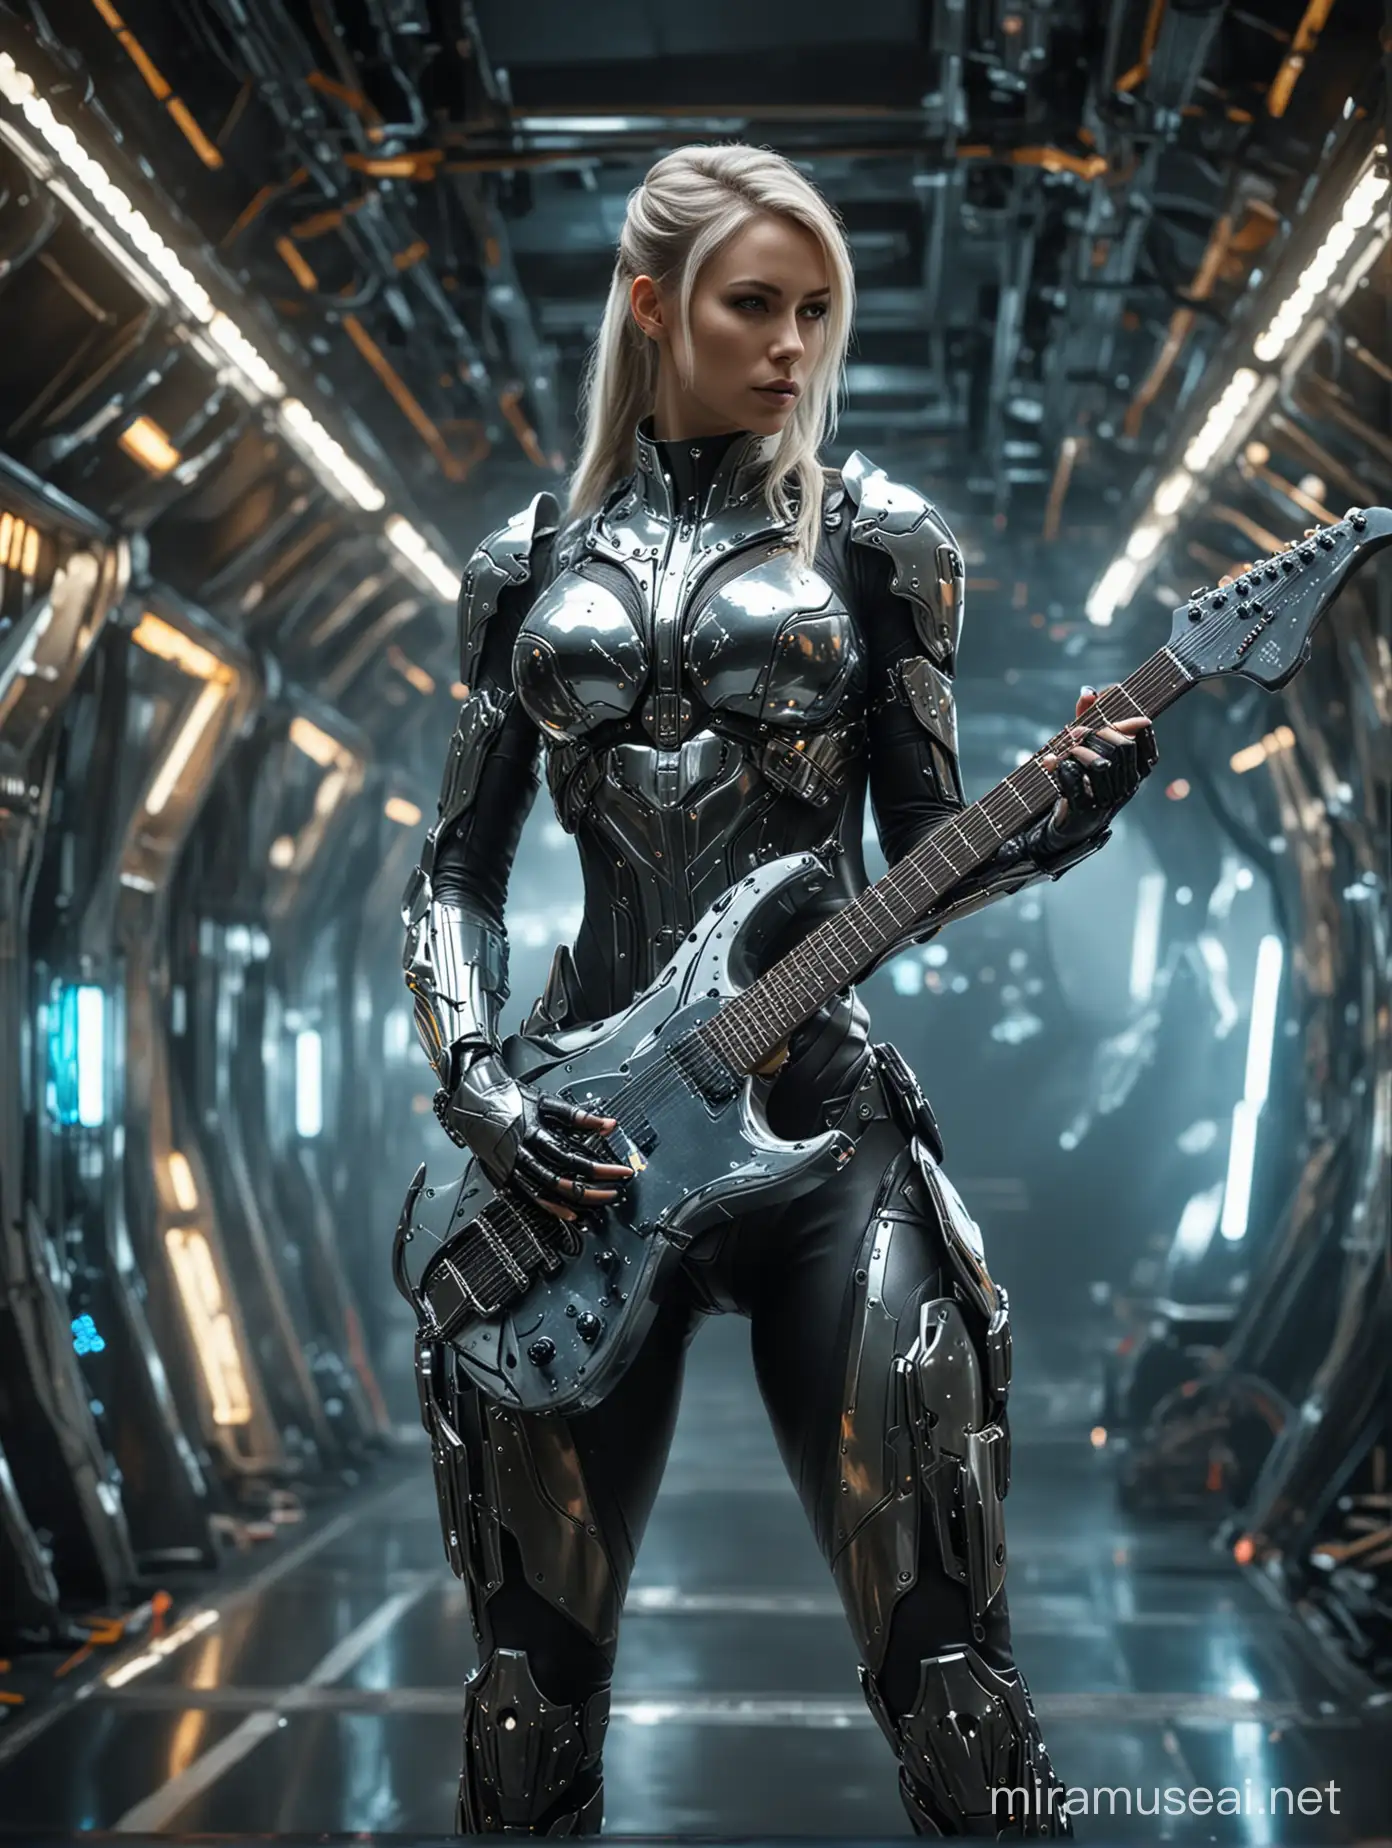 Futuristic Cyborg Woman Playing Electric Guitar in SciFi Spaceship